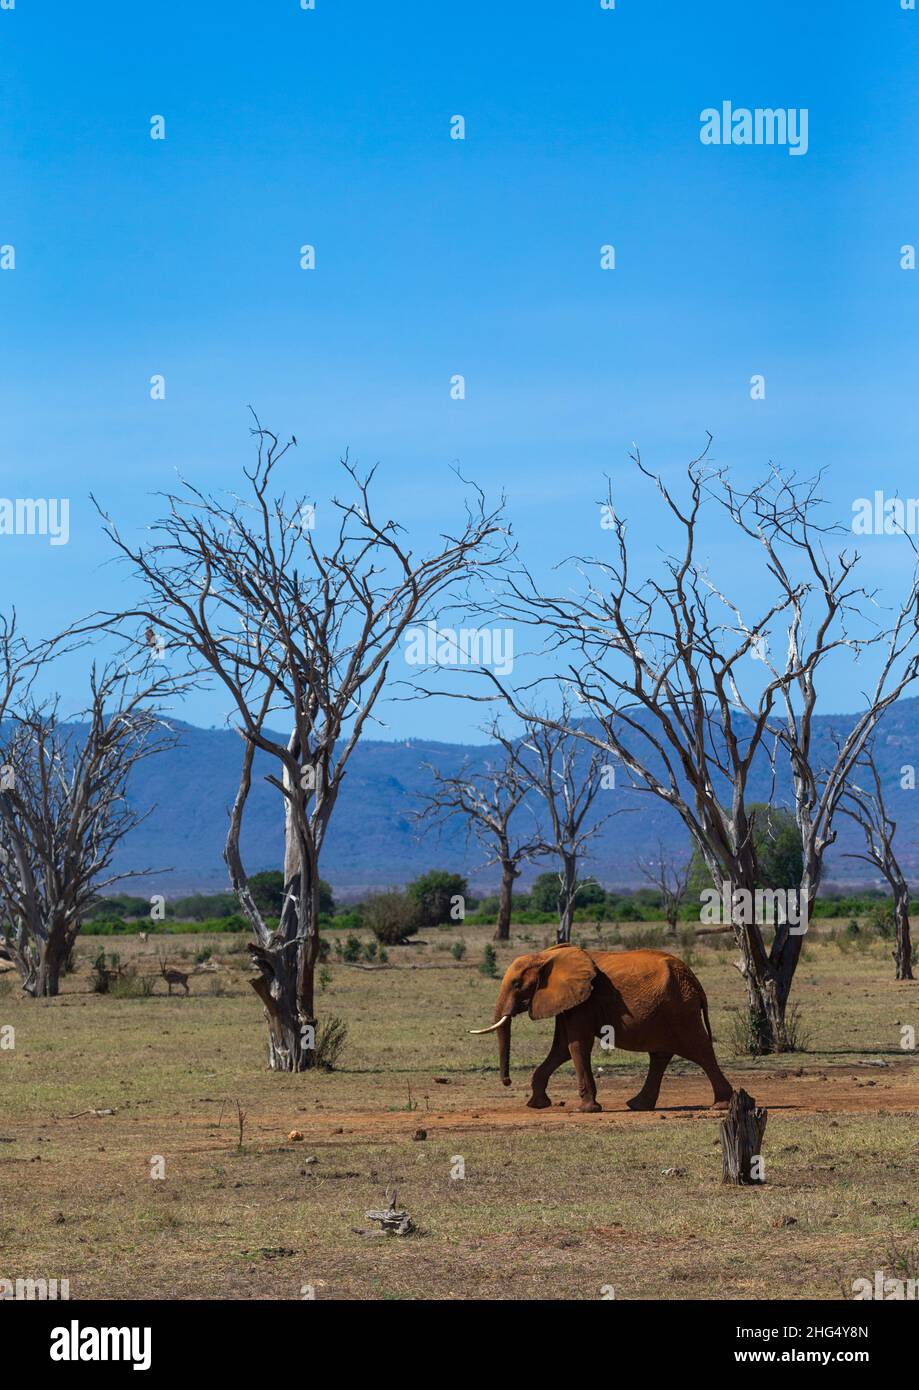 Elepehant in mezzo agli alberi morti, Coast Province, Tsavo East National Park, Kenya Foto Stock